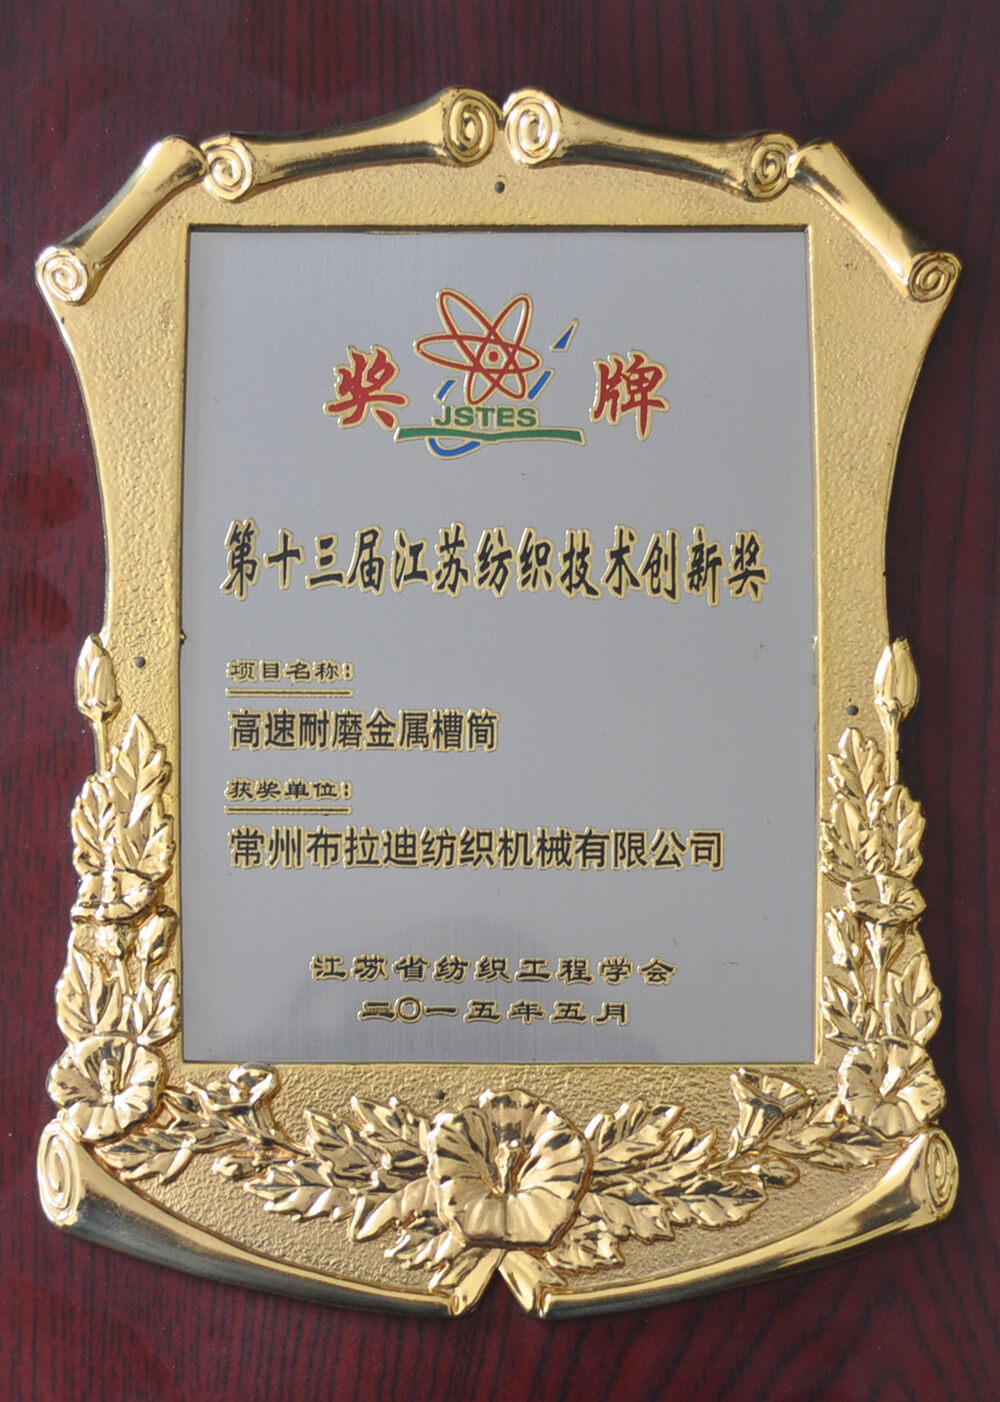 The 13th Jiangsu Textile Technology Innovation Award